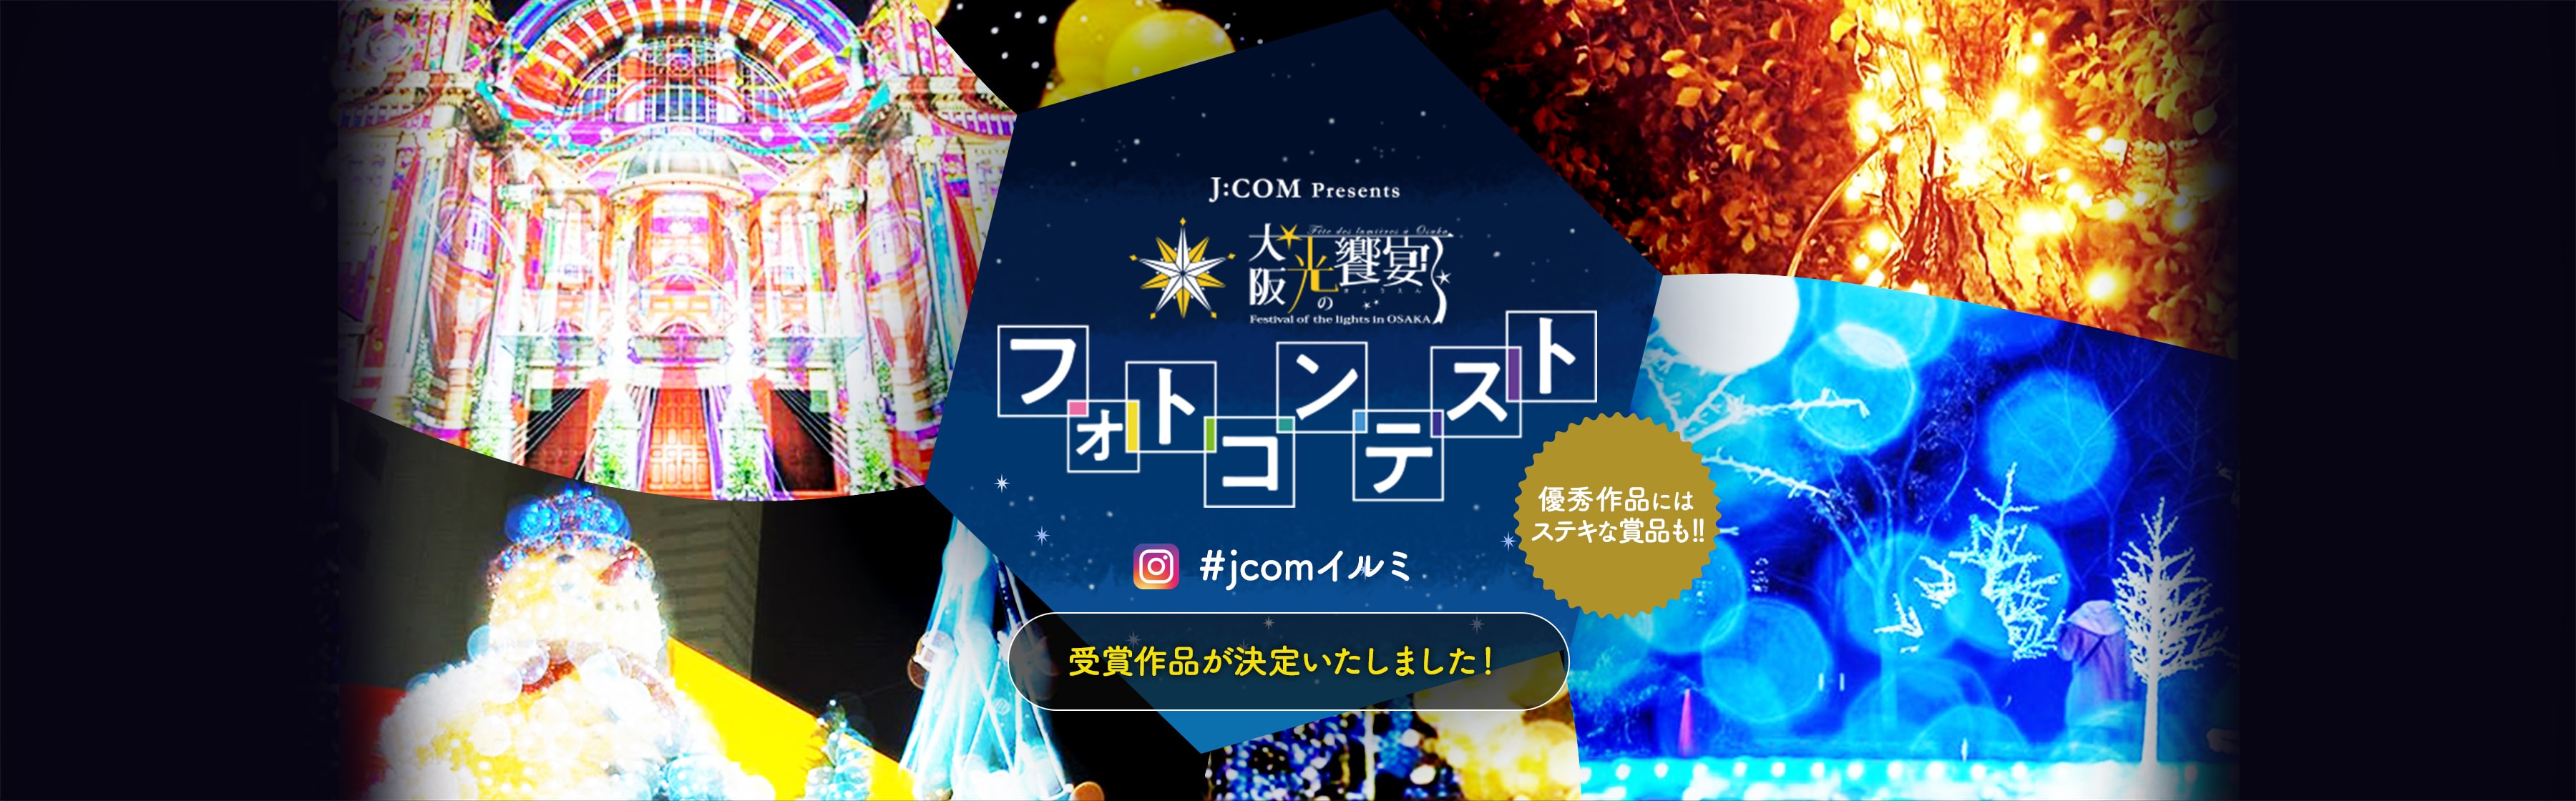 J:COM Presents 大阪光の饗宴2019 フォトコンテスト #jcomイルミ 優秀作品にはステキな賞品も！！ 受賞作品が決定いたしました！